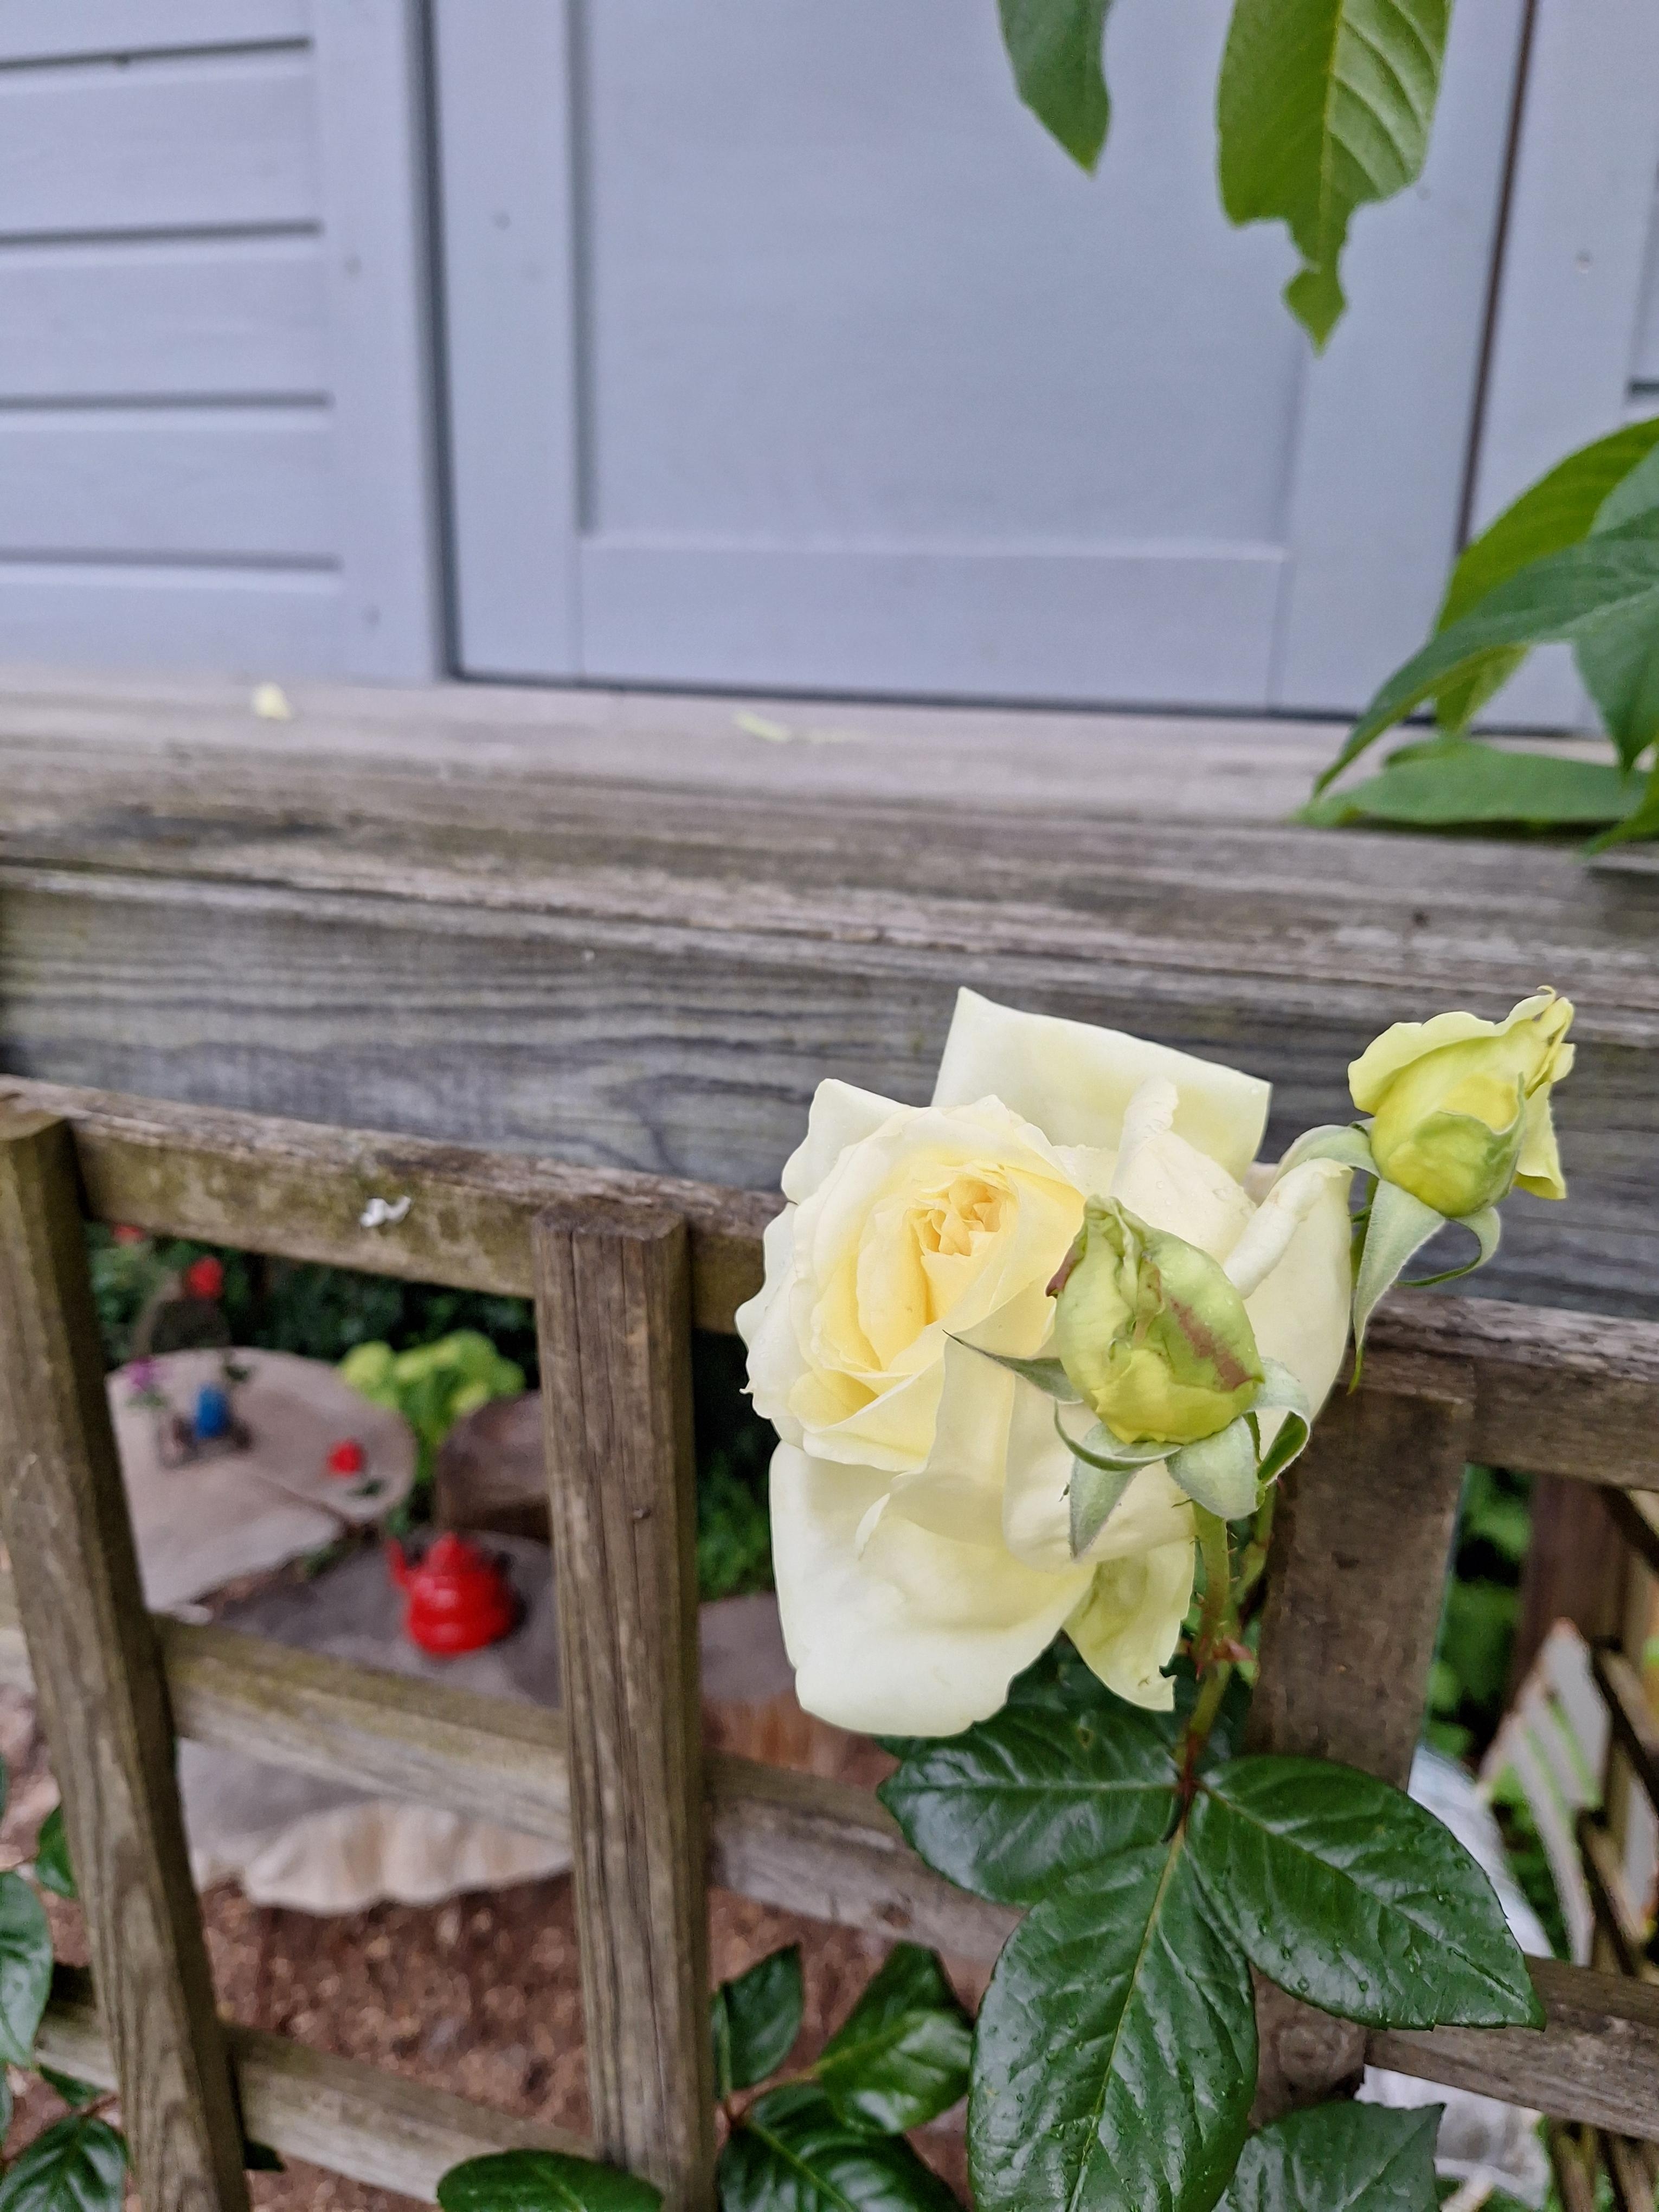 STOLZ
#Rose #Garten #BlumenimGarten #Deko #Häusschen